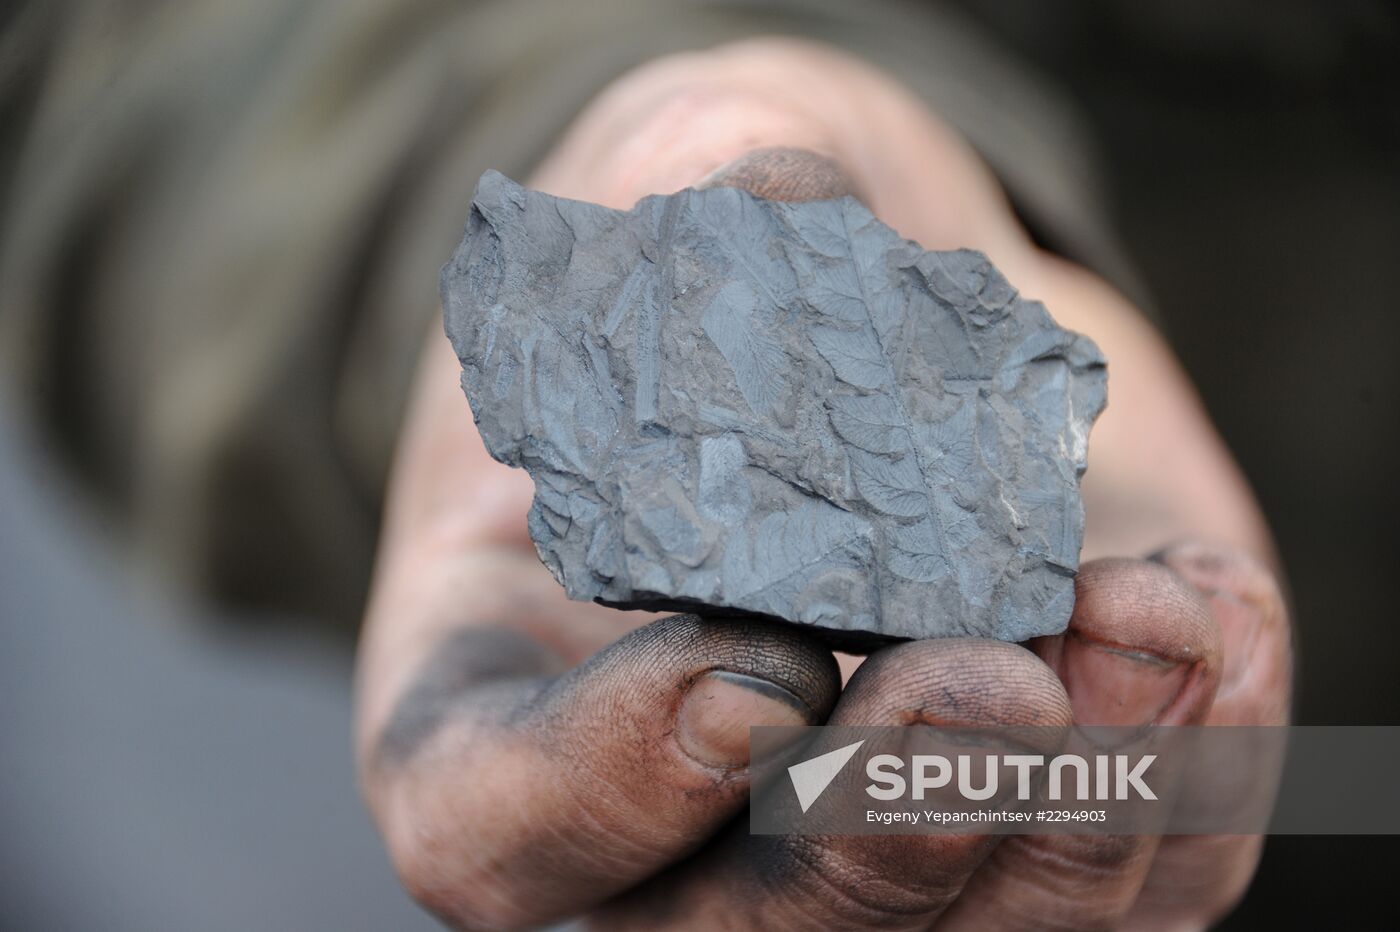 Coal extraction at Apsatskoye coal field in Trans-Baikal Territory